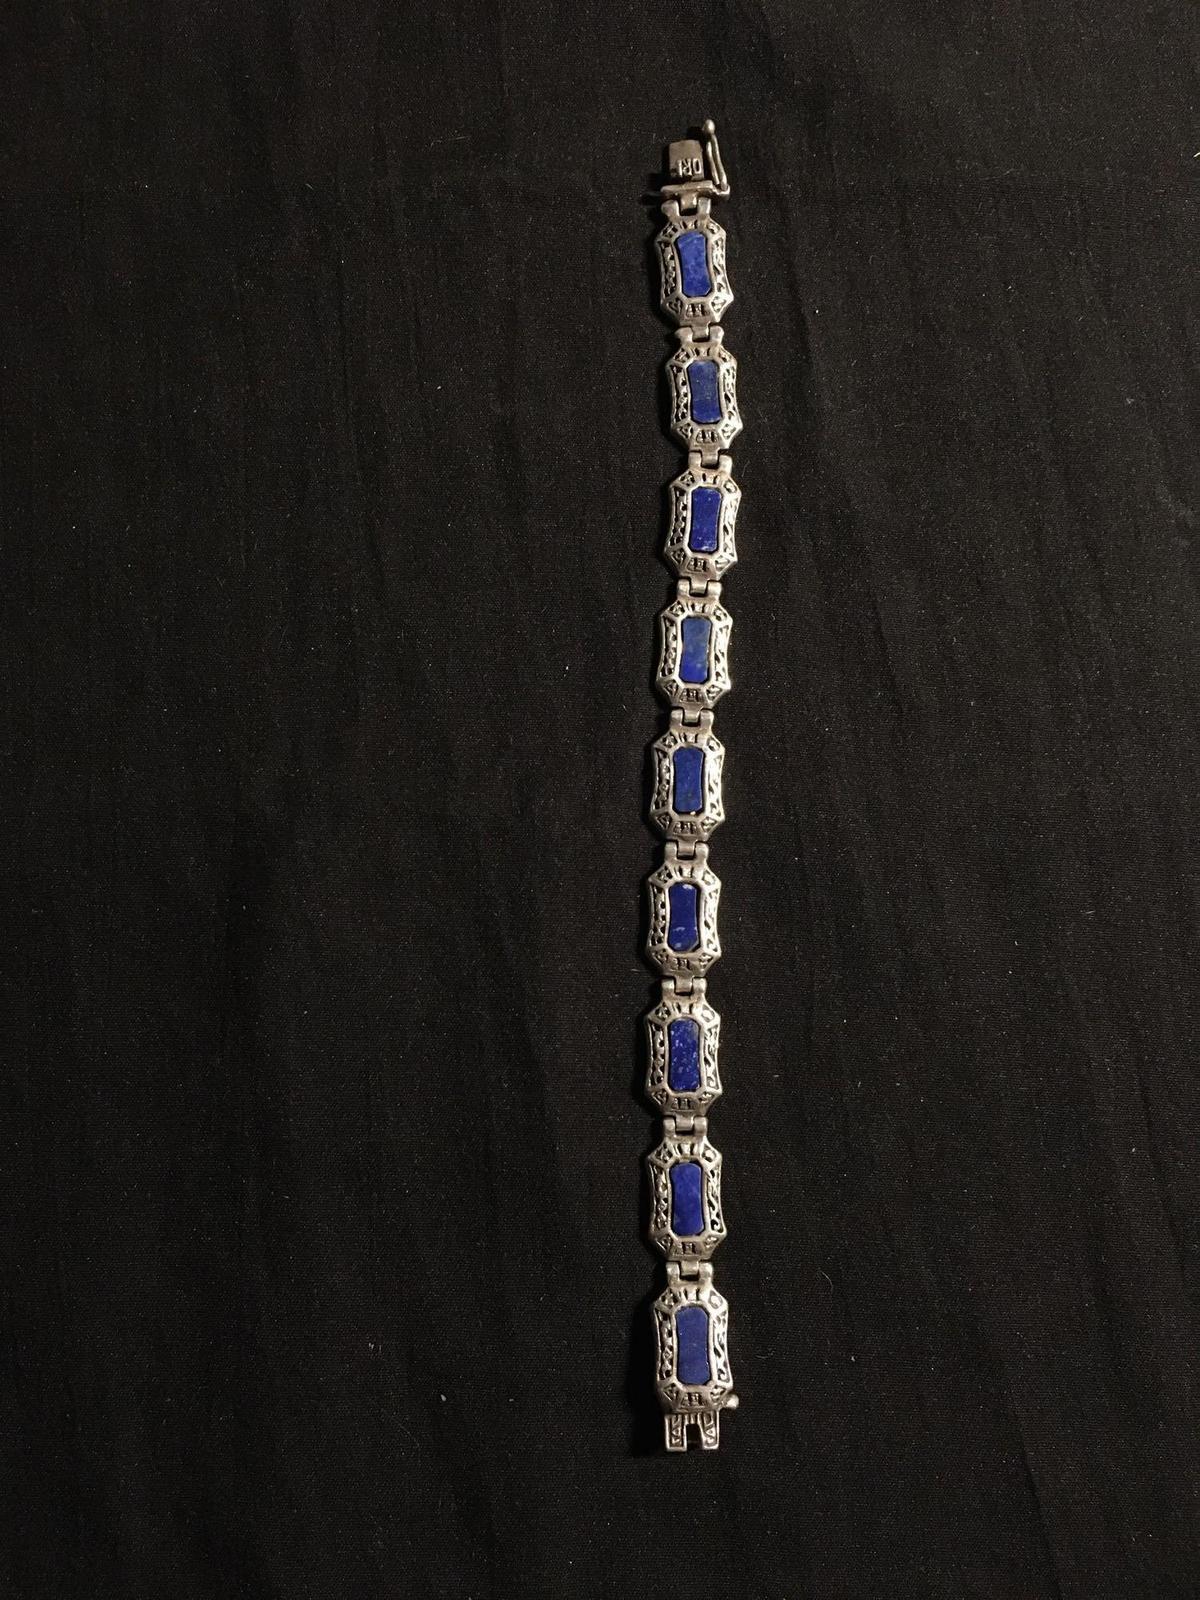 Asian Inspired 10mm Wide 7in Long Signed Designer Sterling Silver Link Bracelet w/ Lapis Inlaid